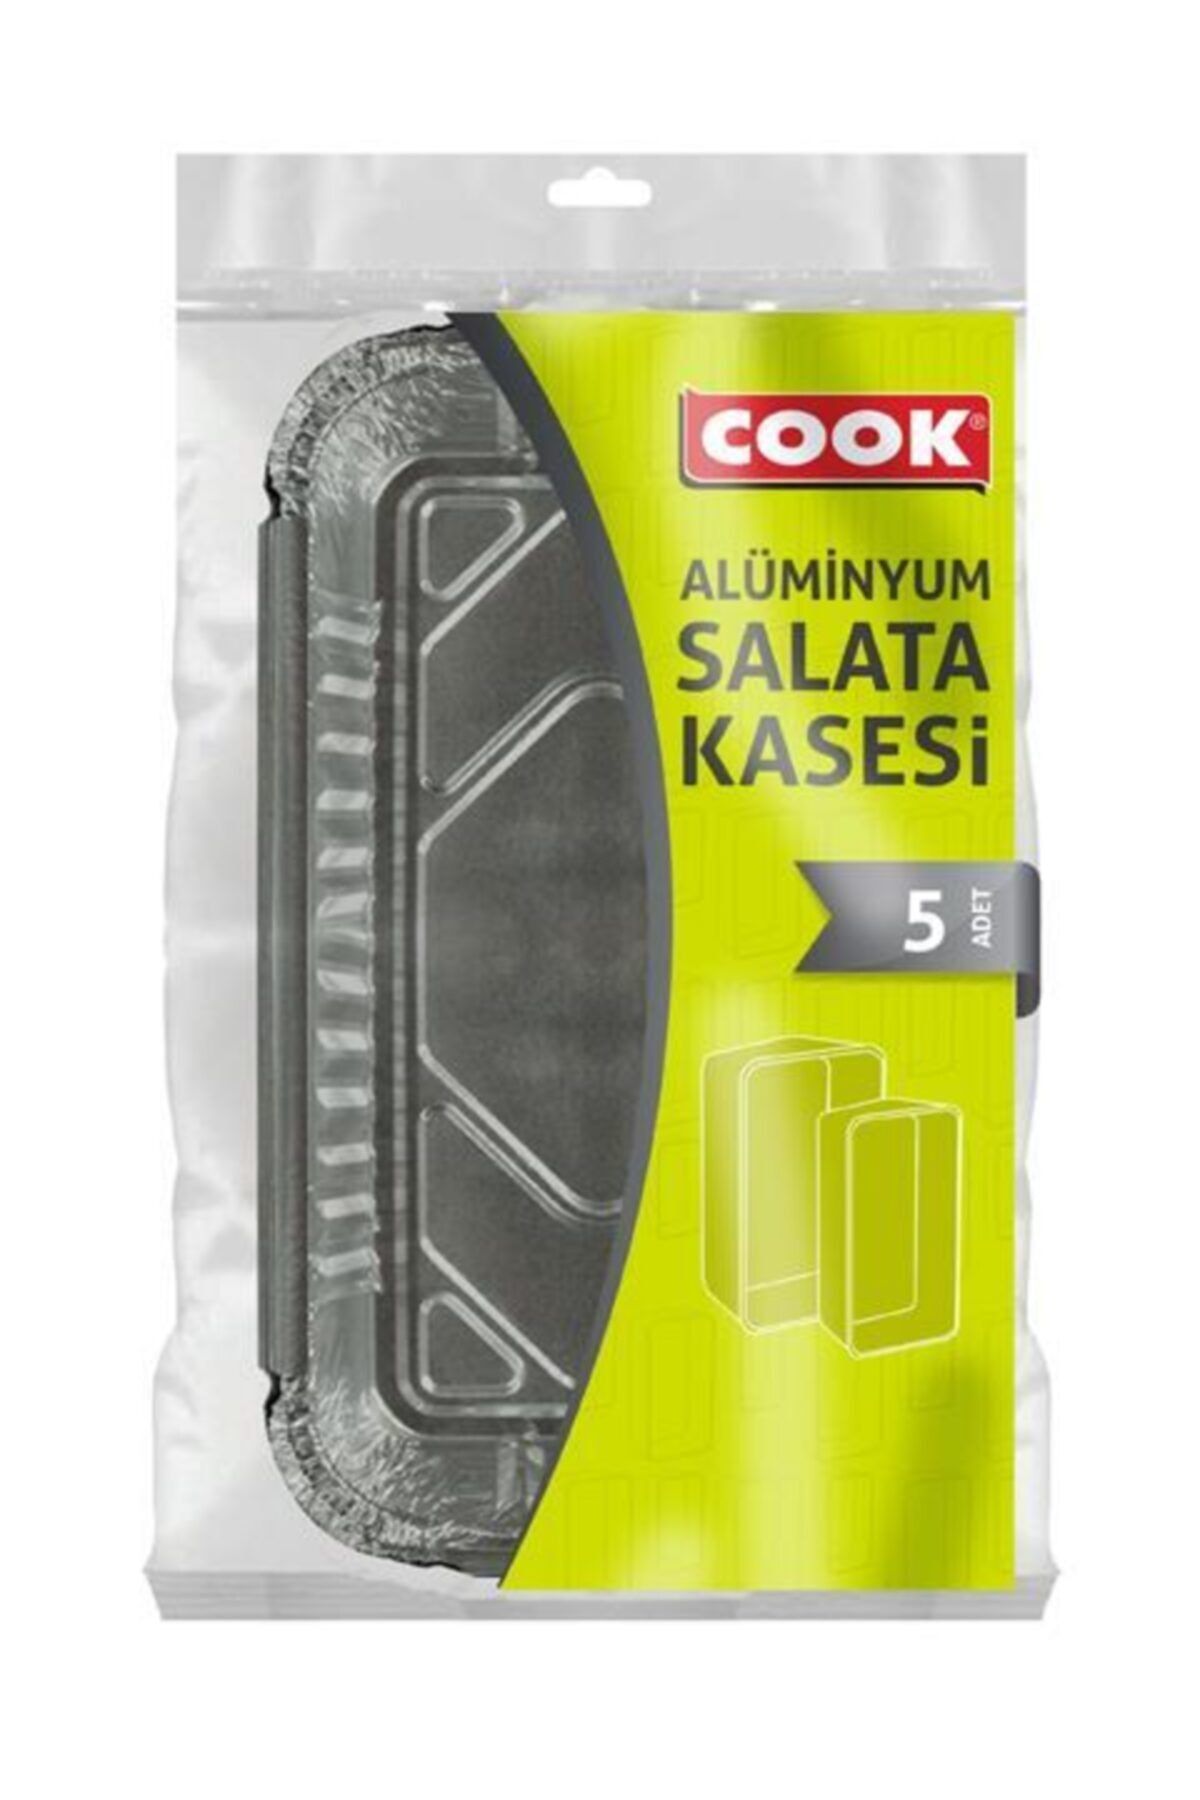 COOK Alüminyum Salata Kasesi 5 Adet